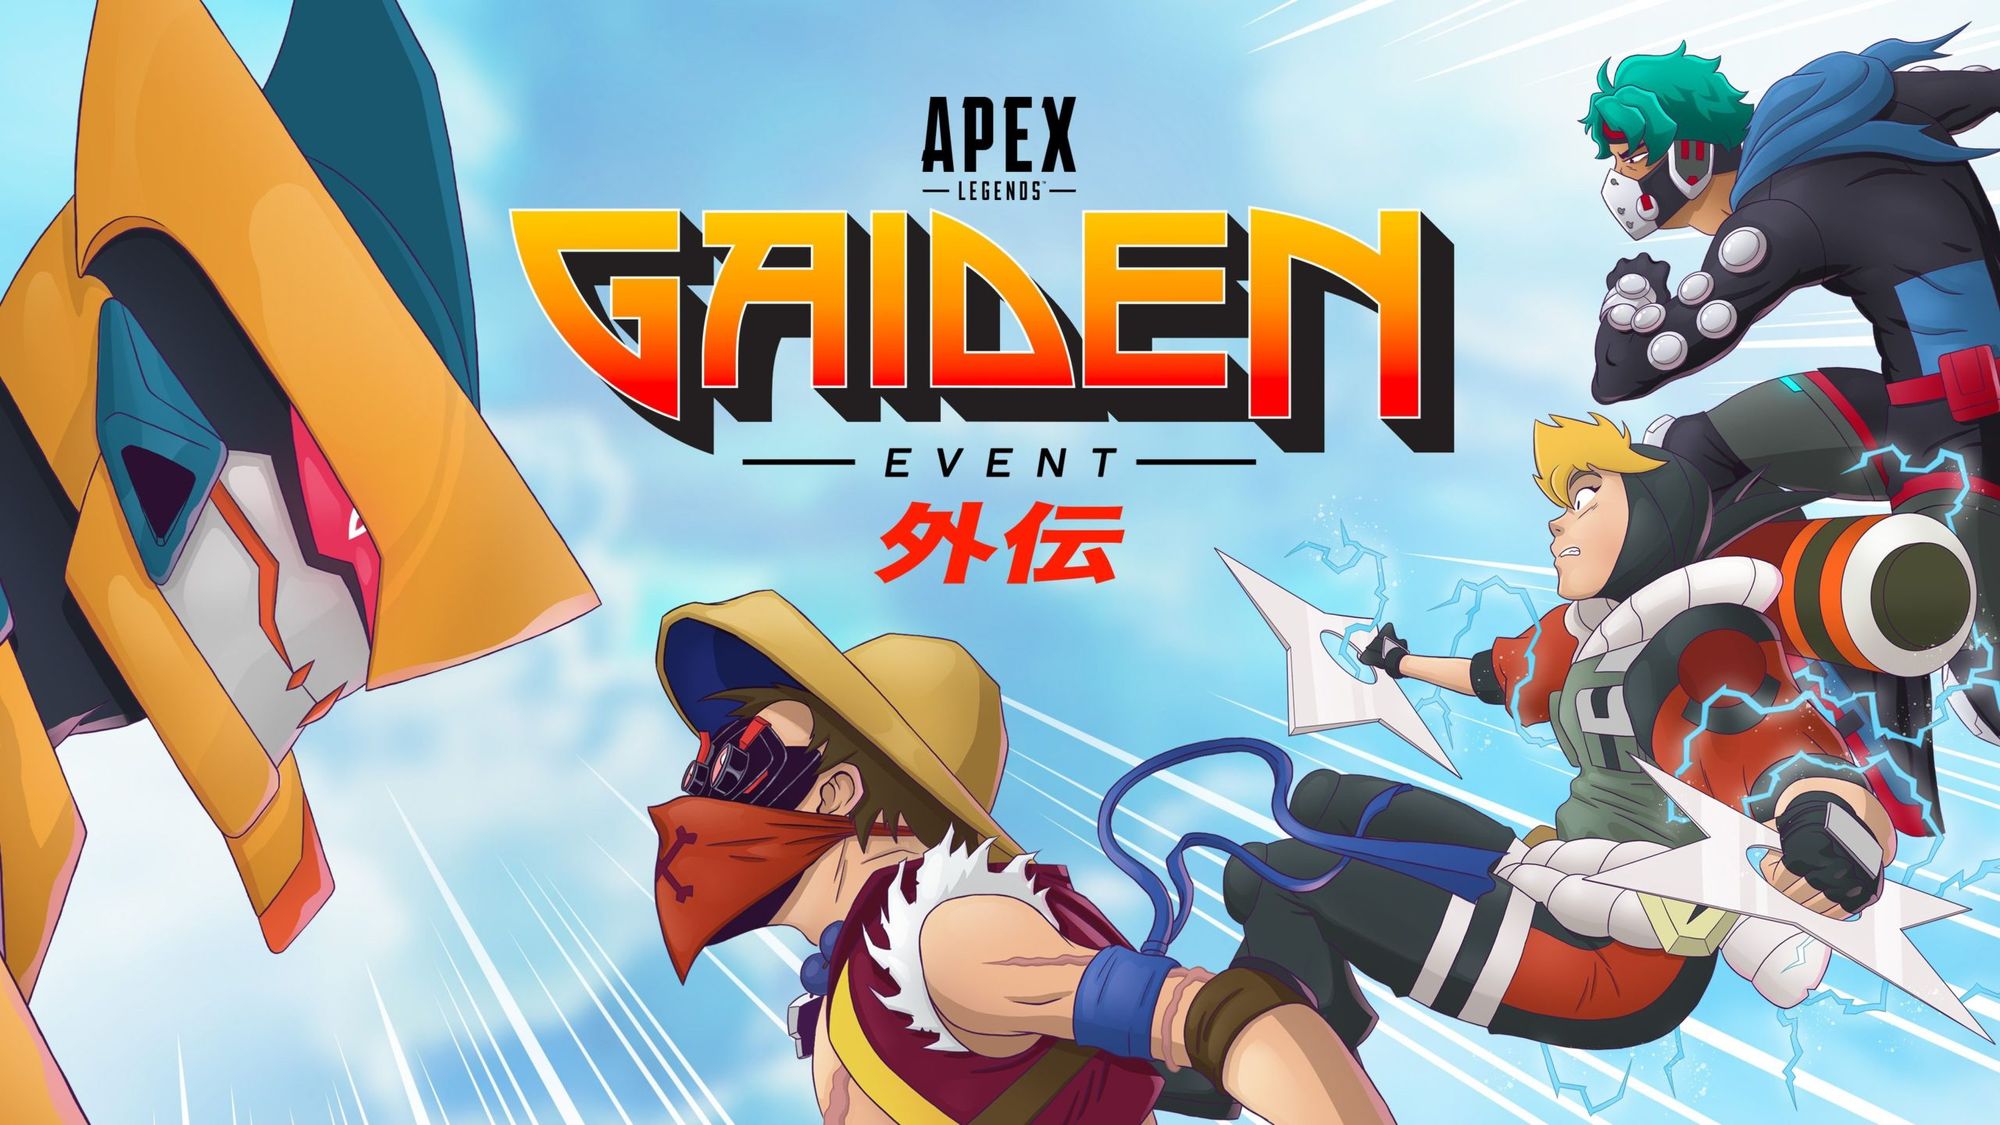 Get Ready for Apex Legends’ Gaiden Event